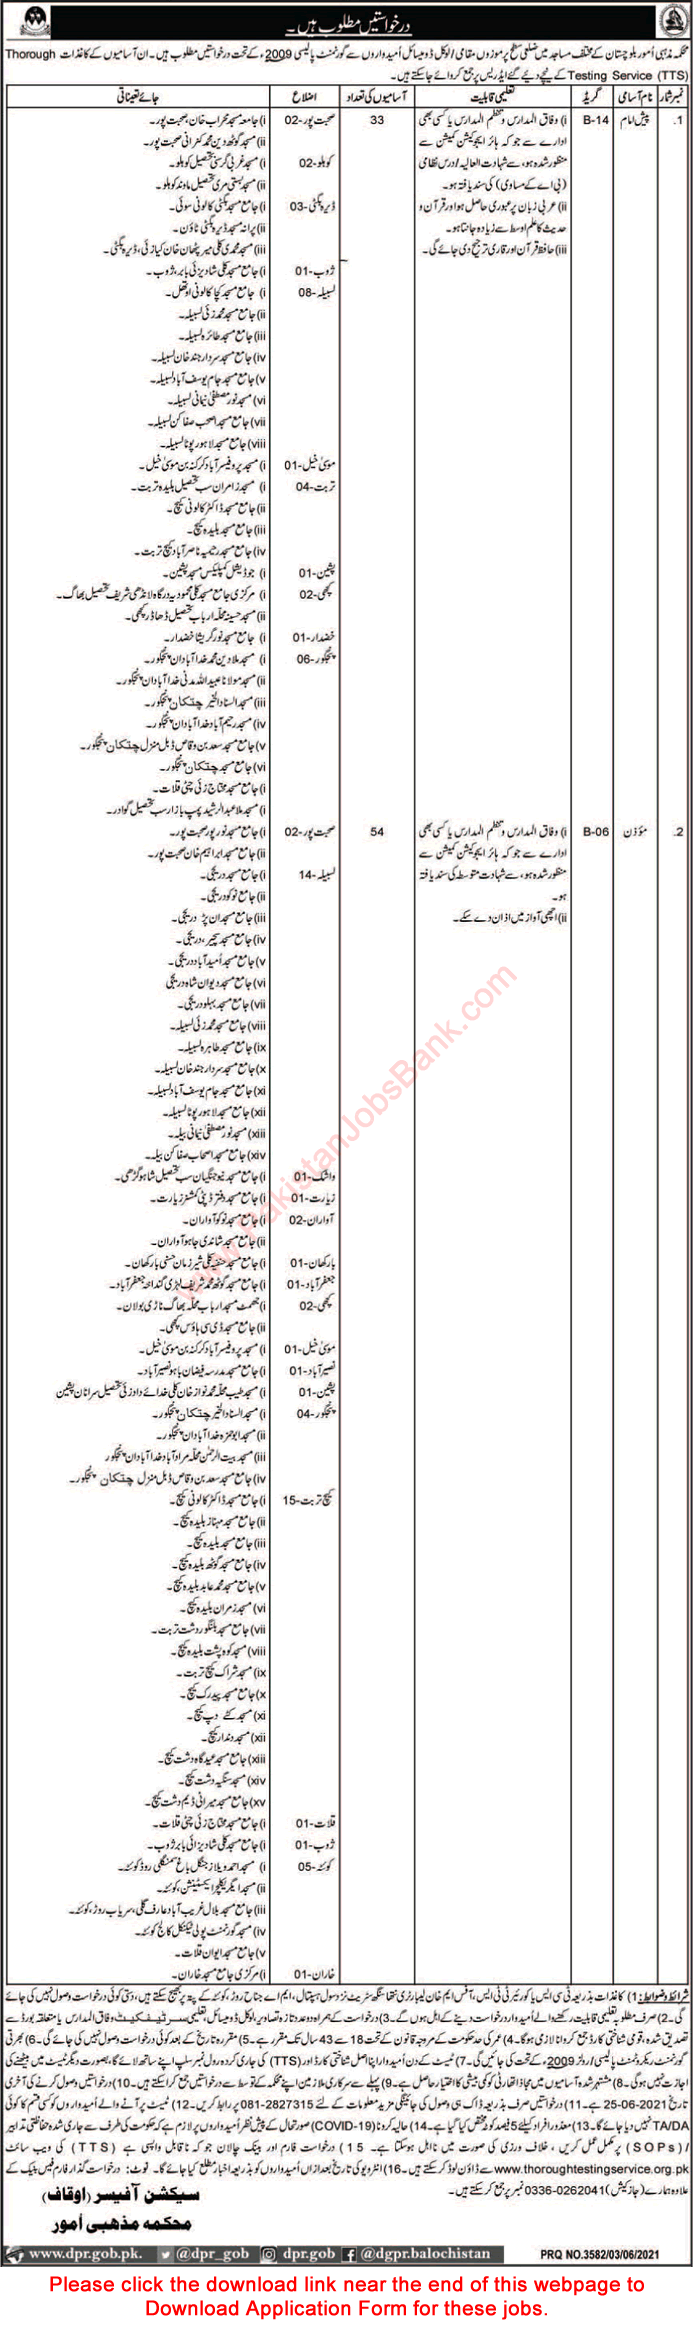 Ministry of Religious Affairs Balochistan Jobs June 2021 TTS Application Form Muazzin & Pesh Imam Latest